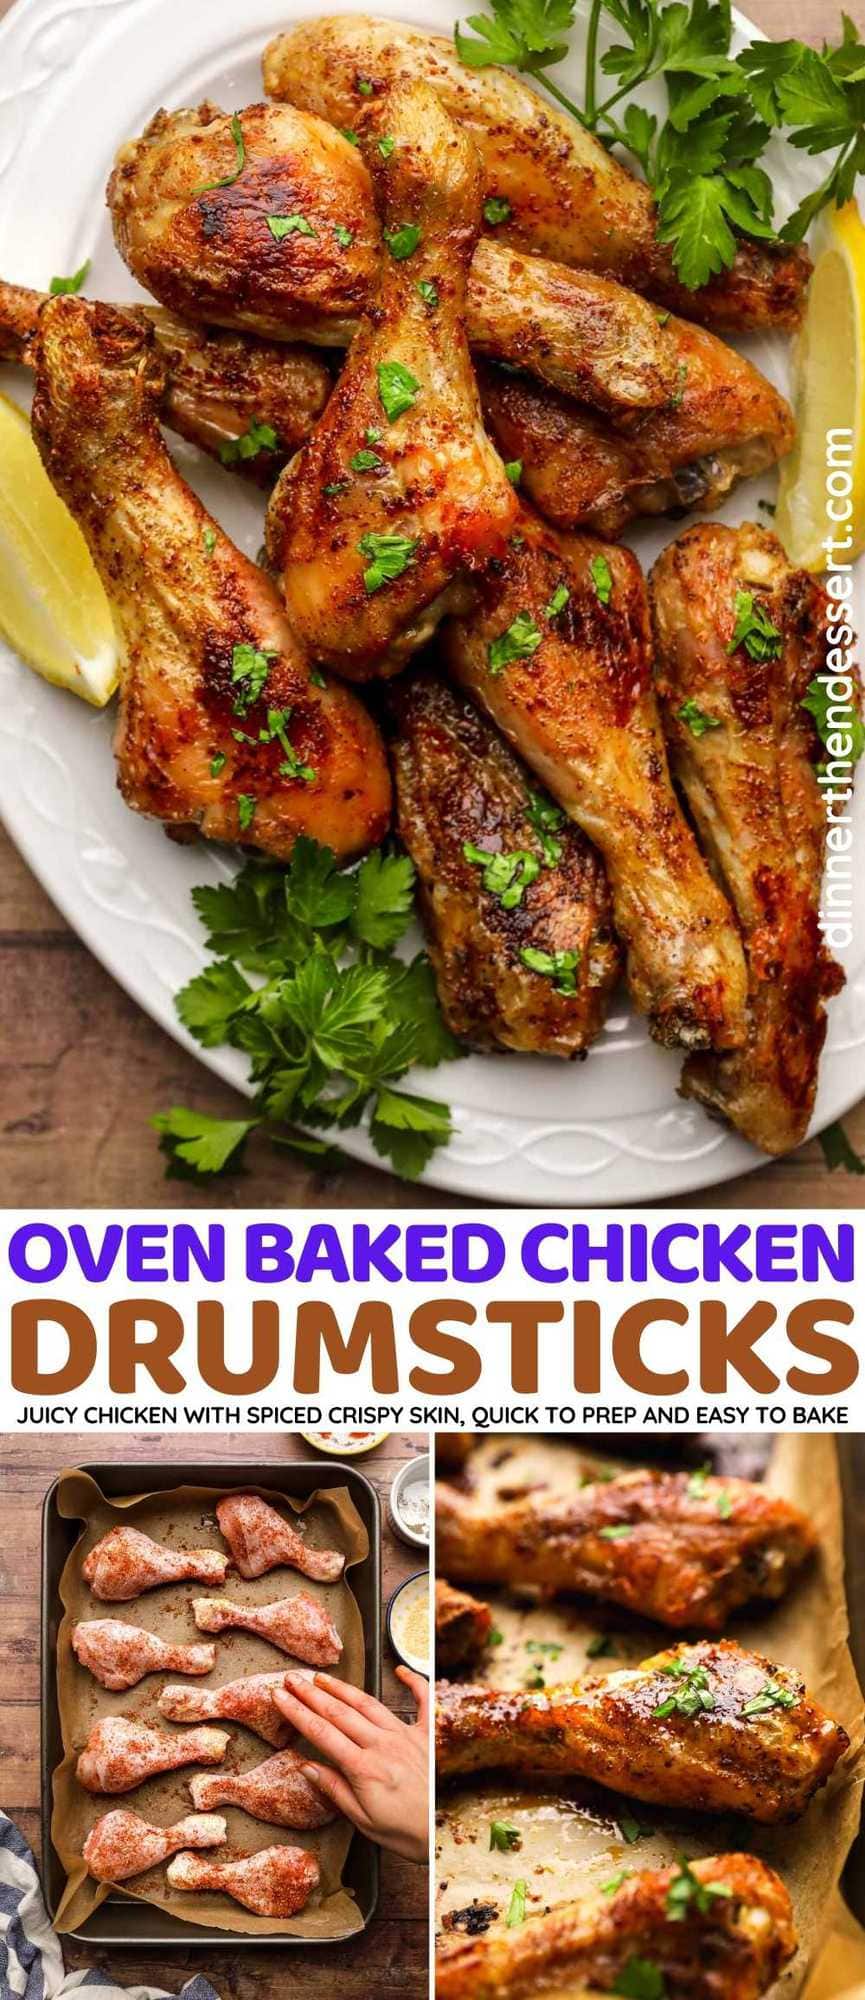 Oven Baked Chicken Drumsticks collage